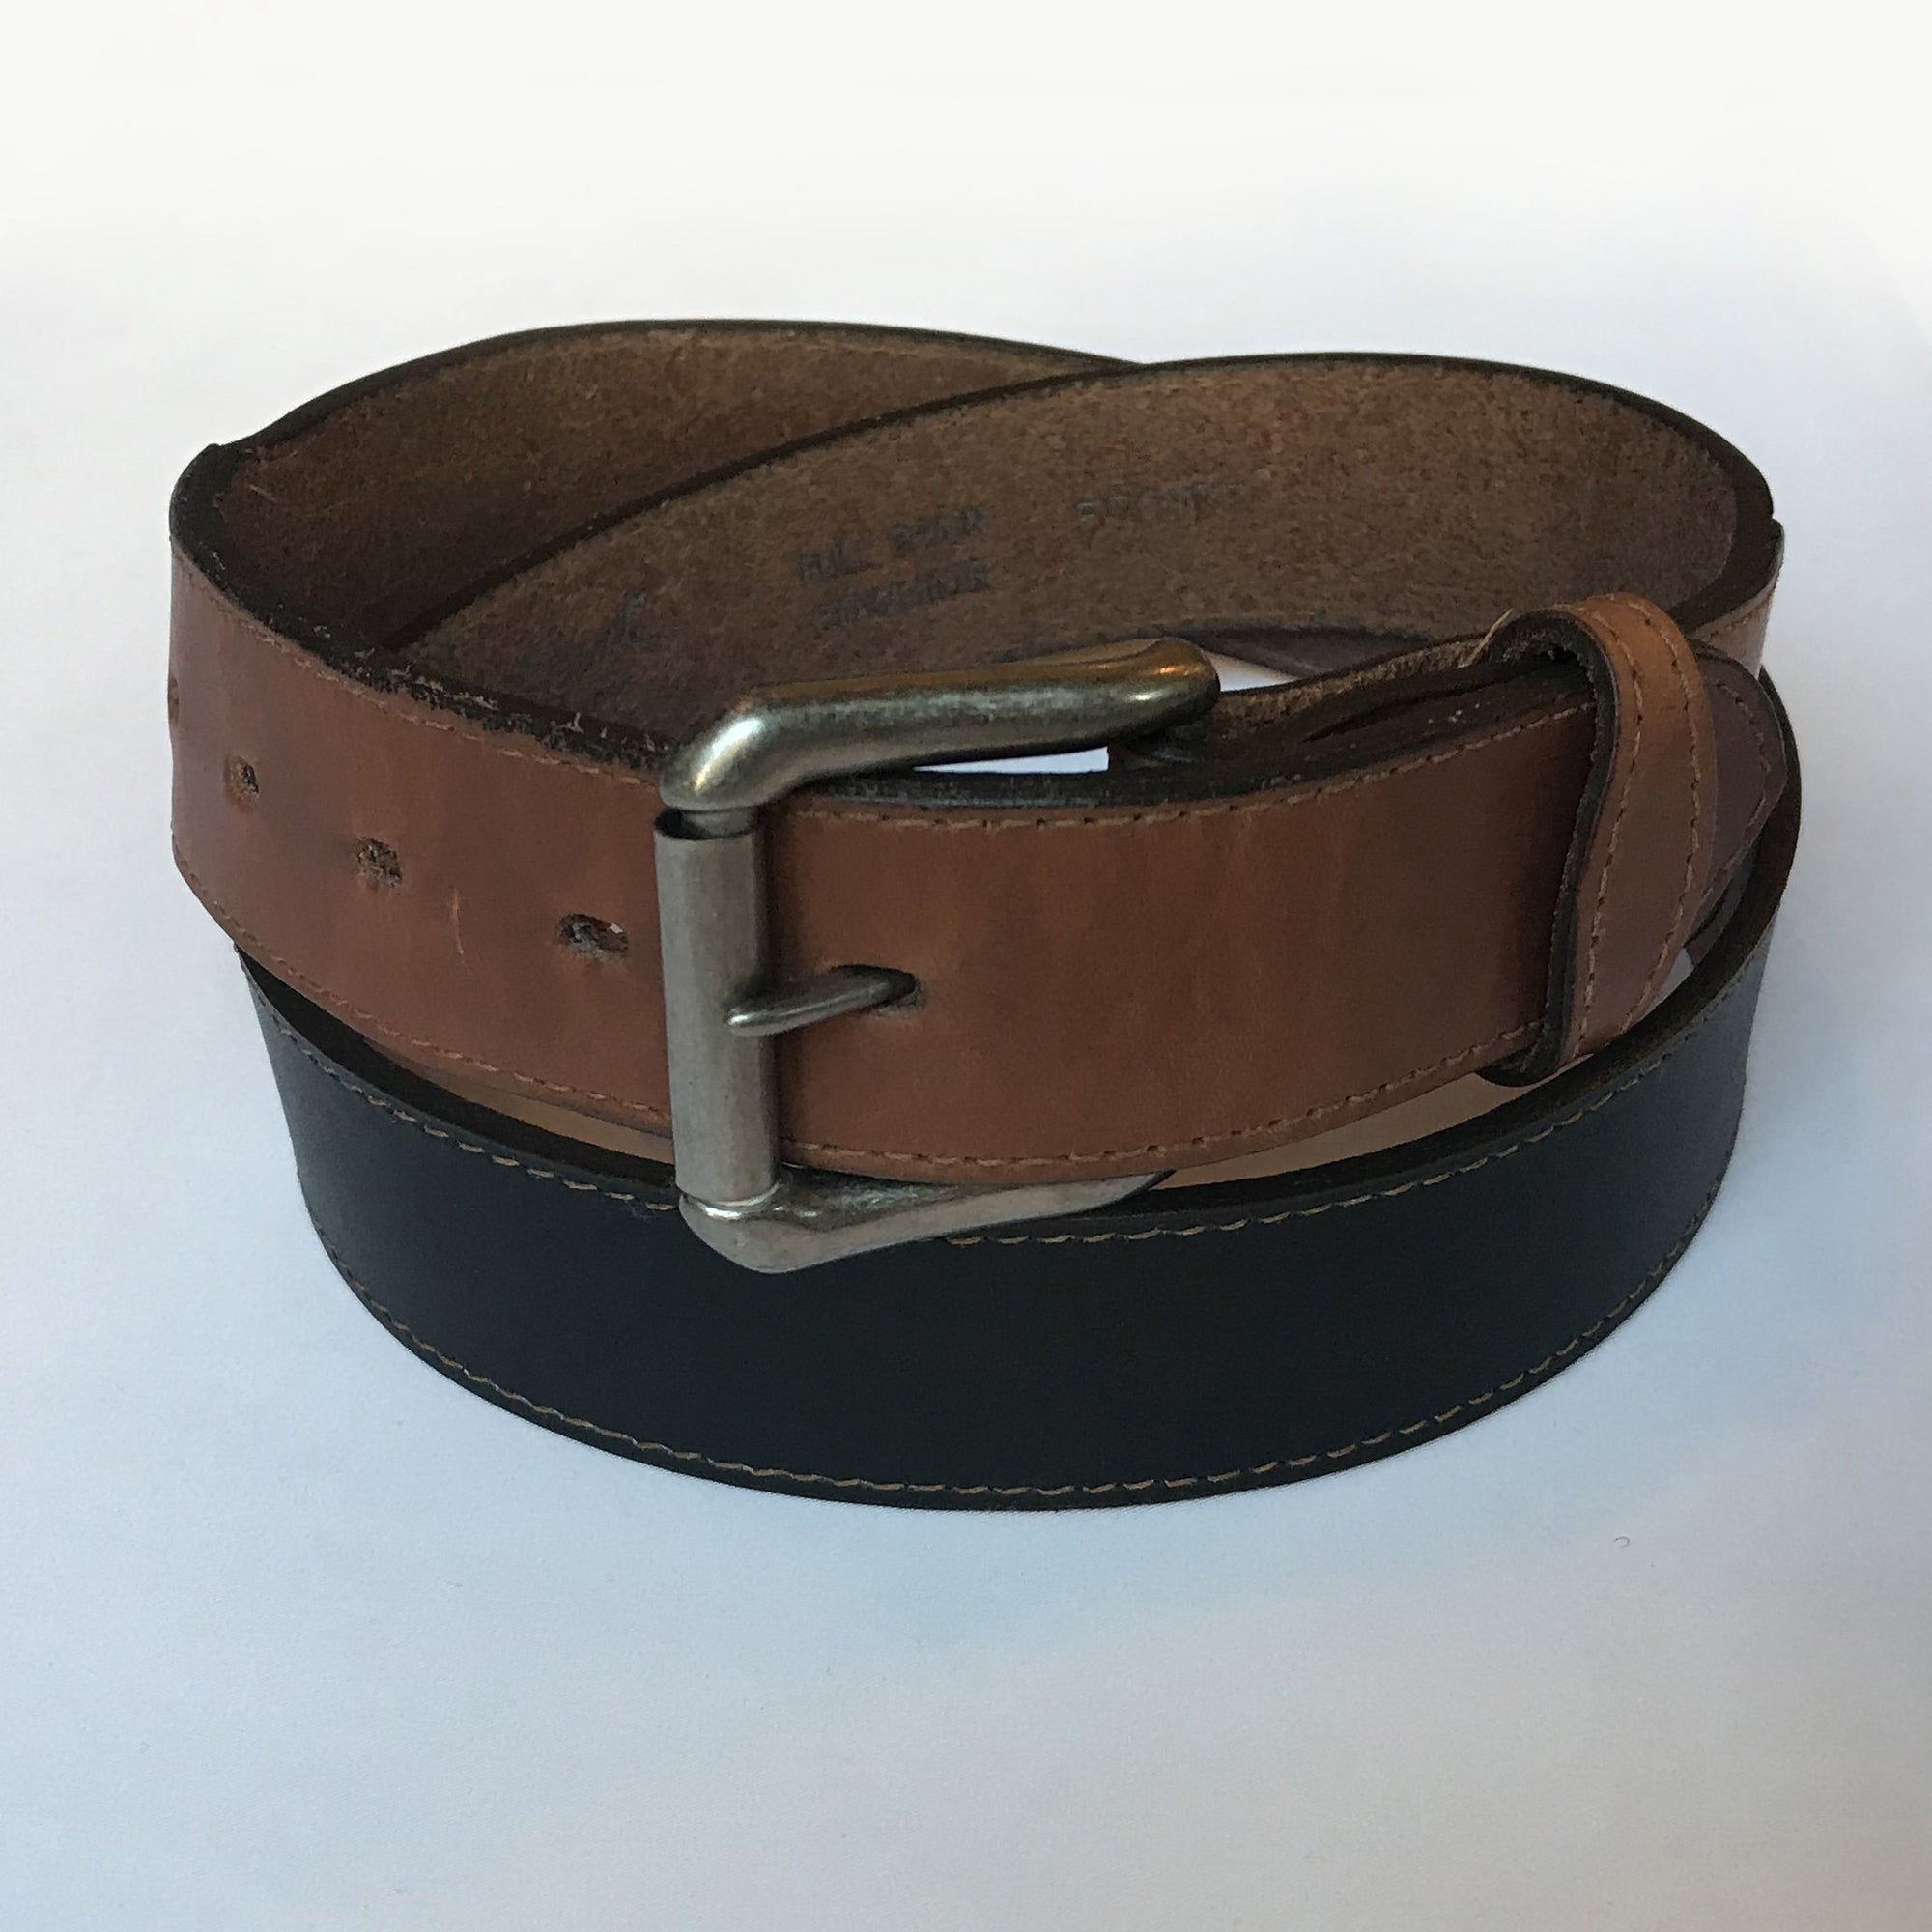 Rockmount Ranch Wear Leather Black and Tan Belt